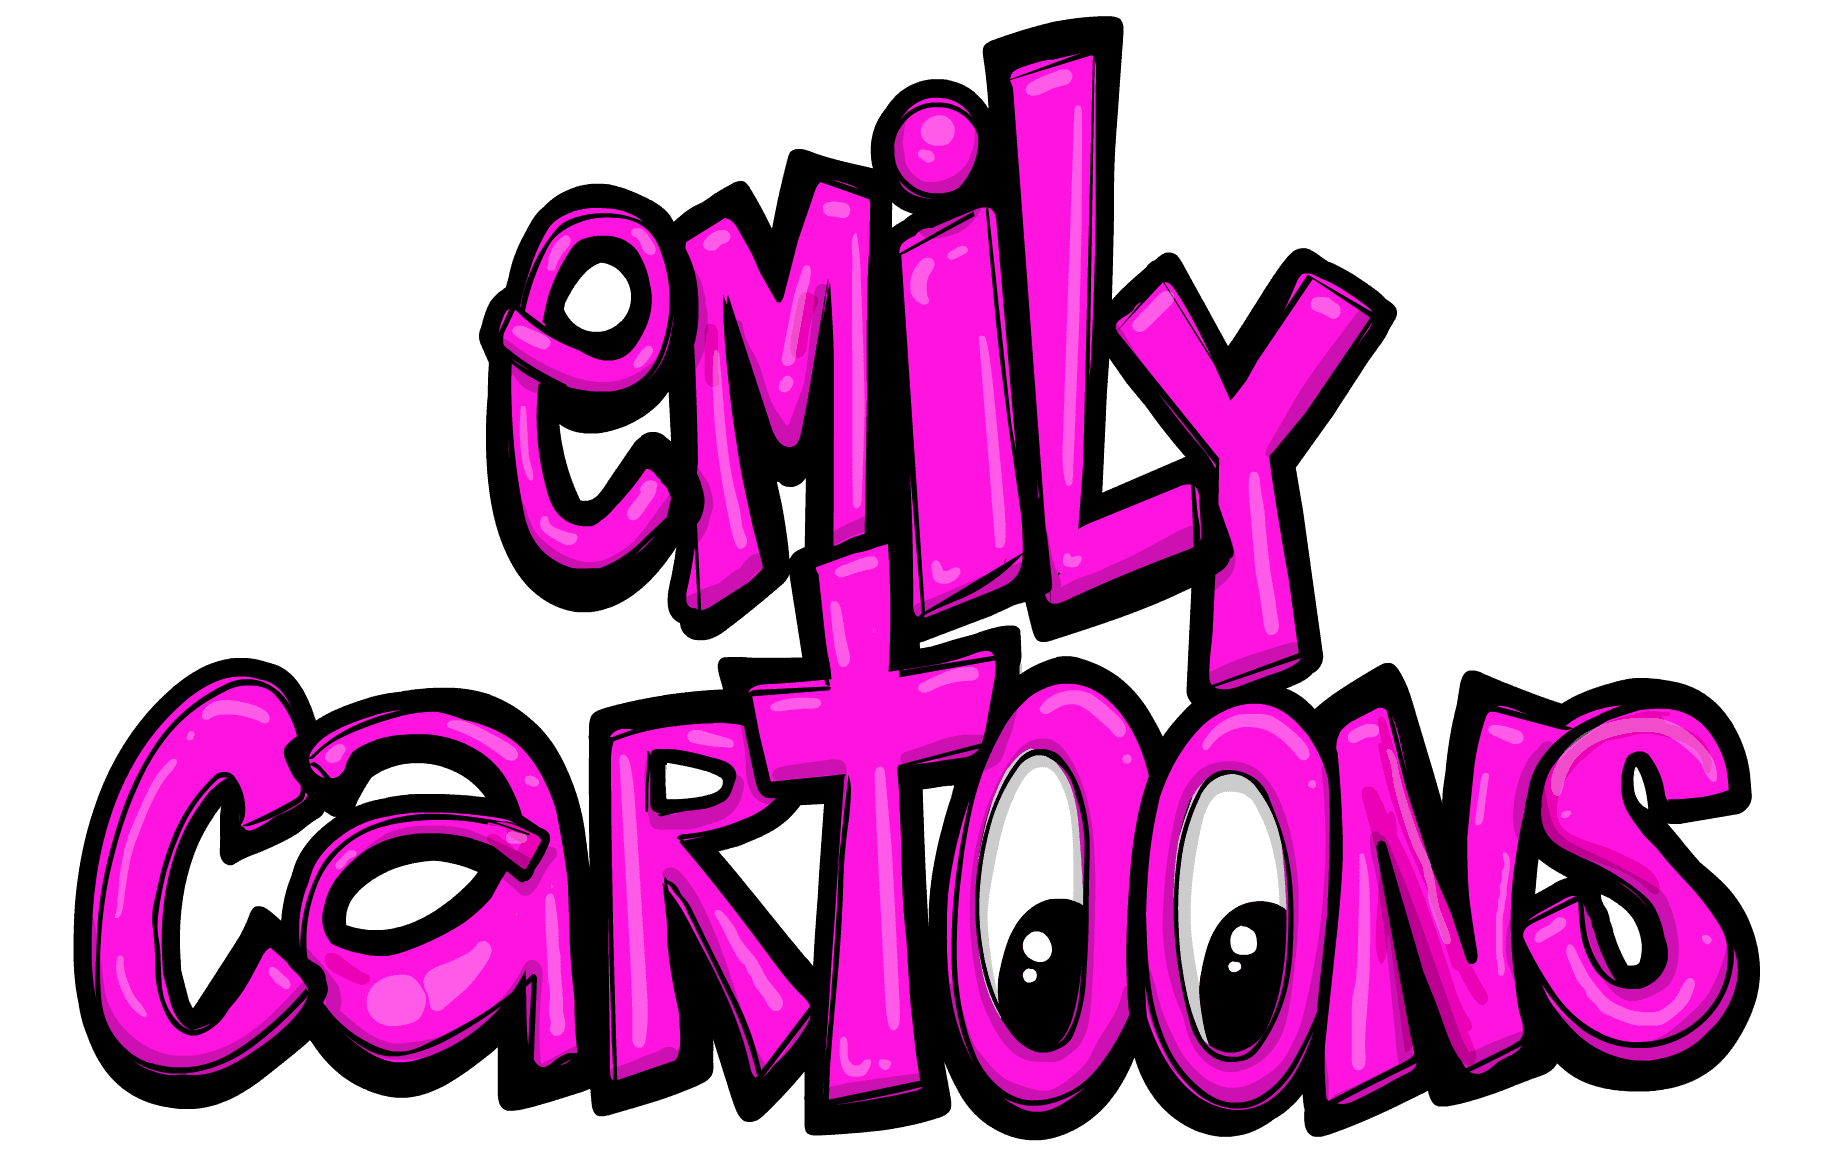 EmilyCartoonsOtherPage 横幅